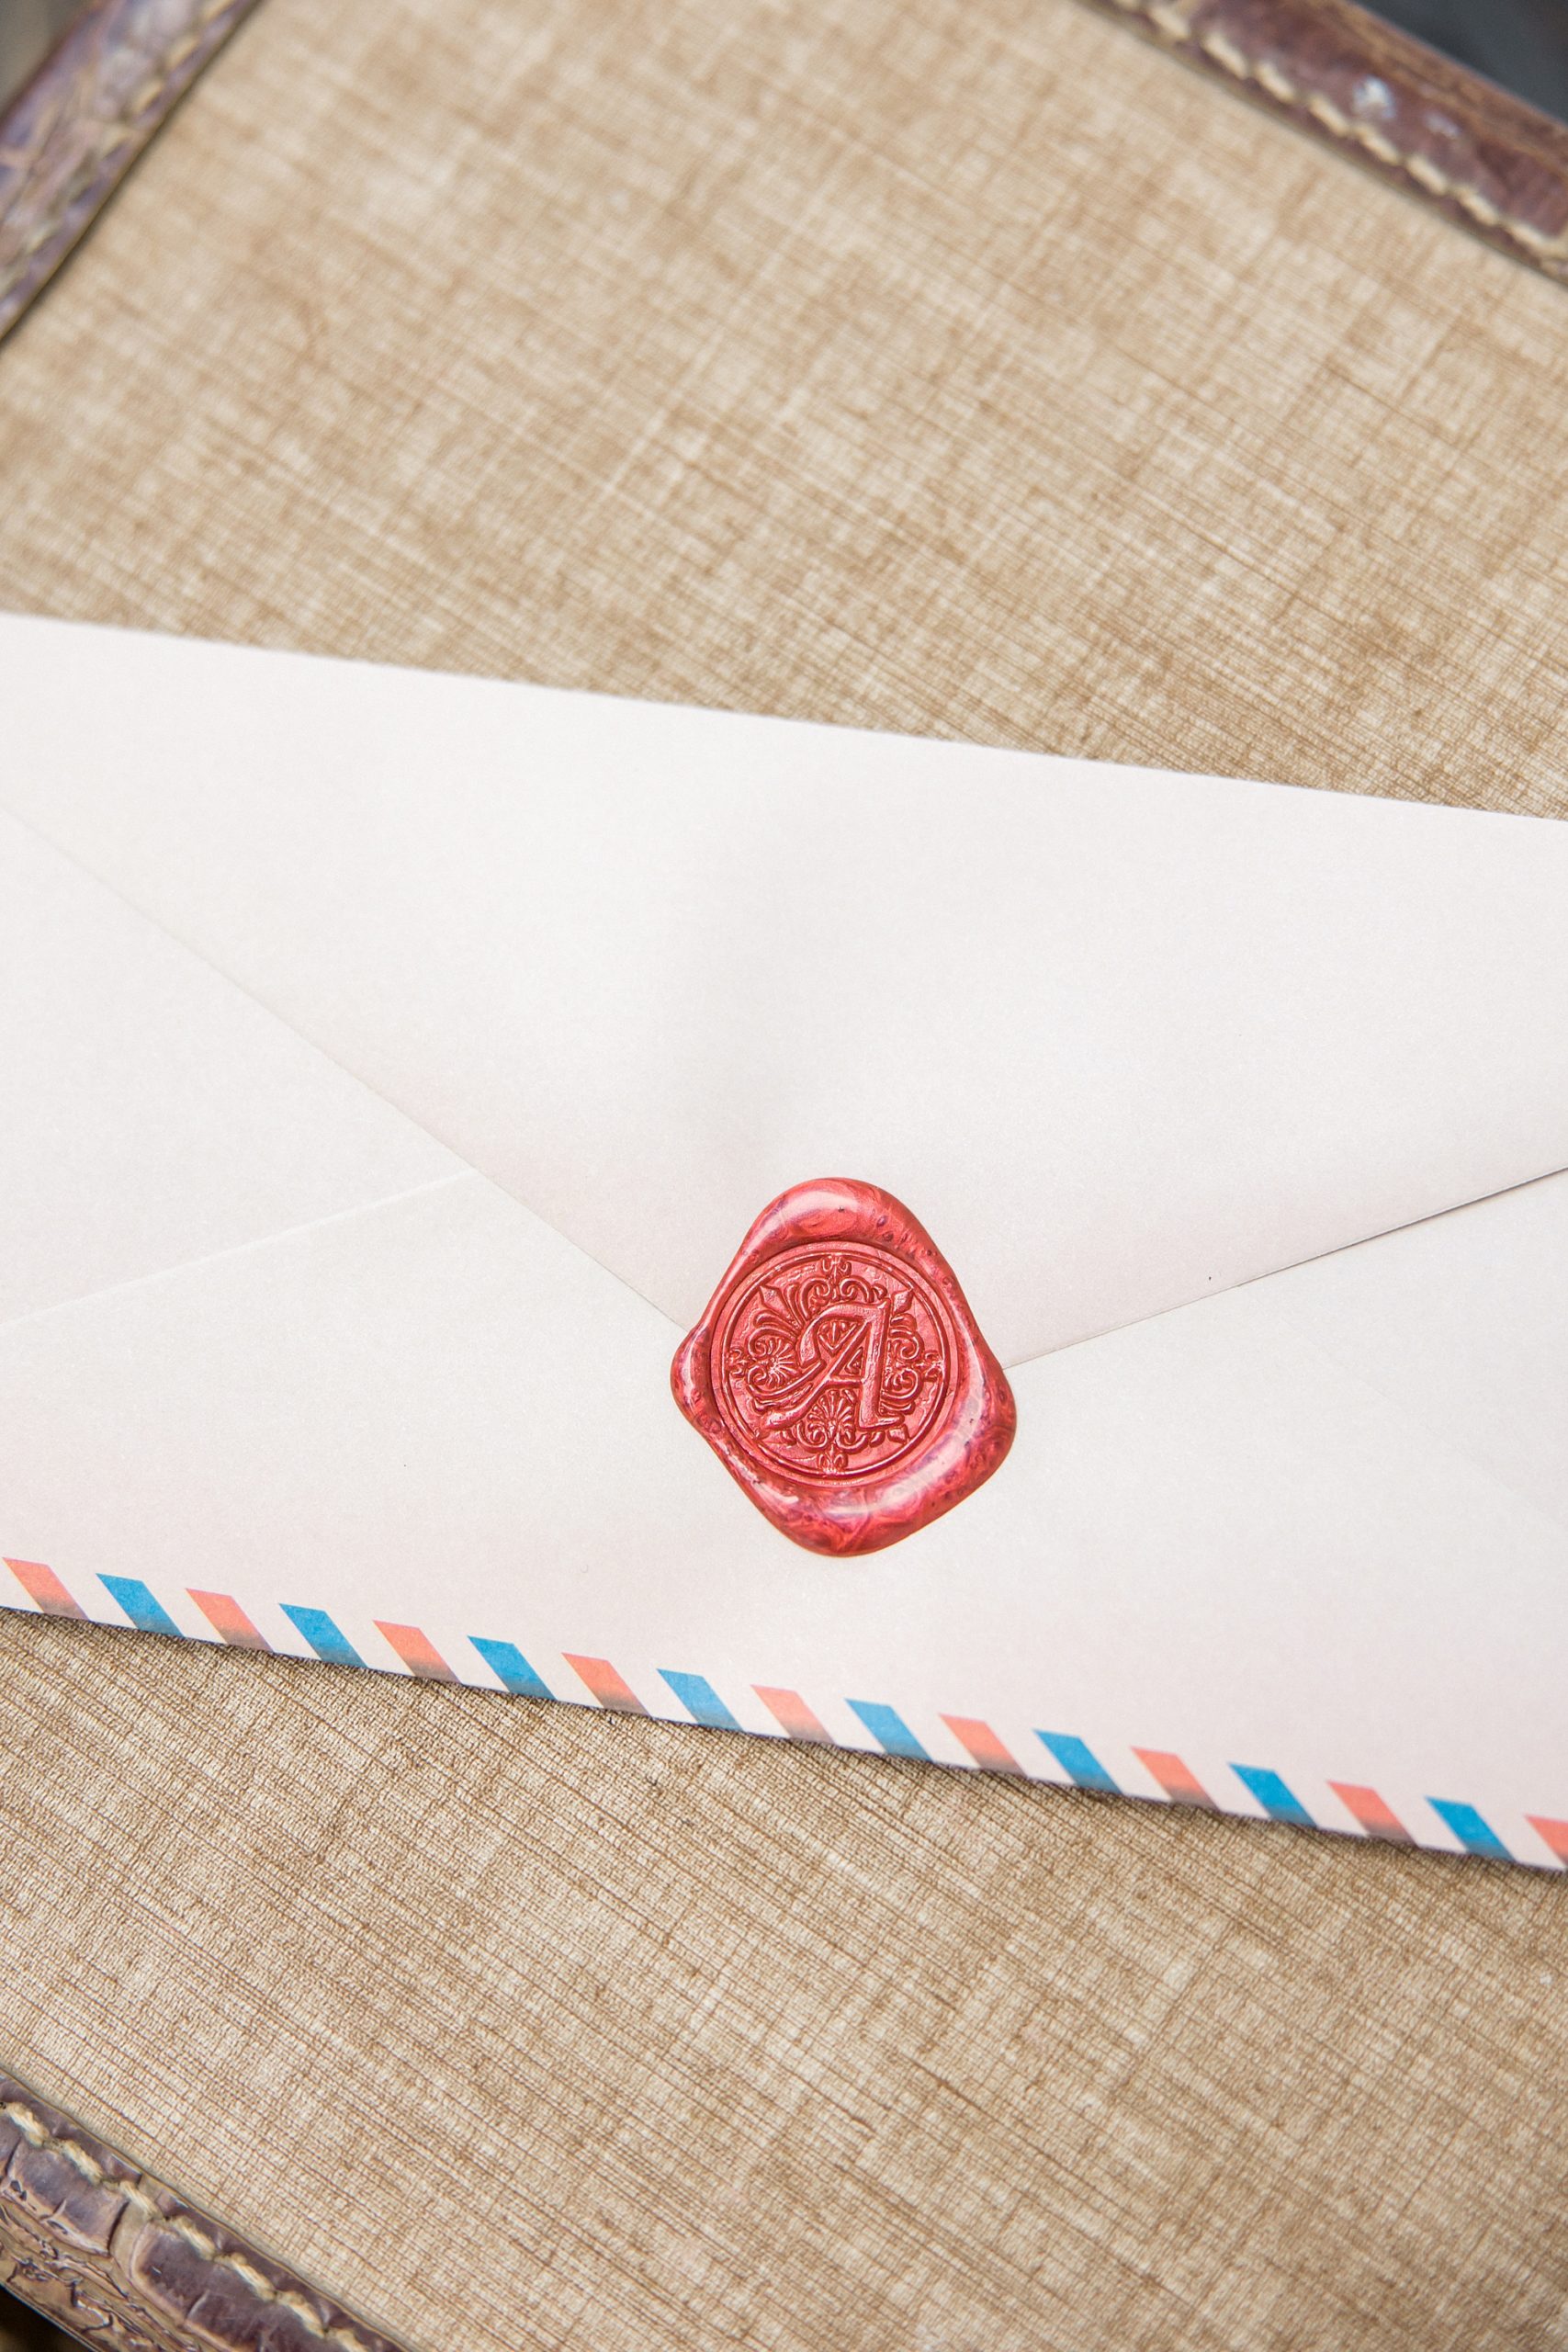 sealed letter for bride from groom